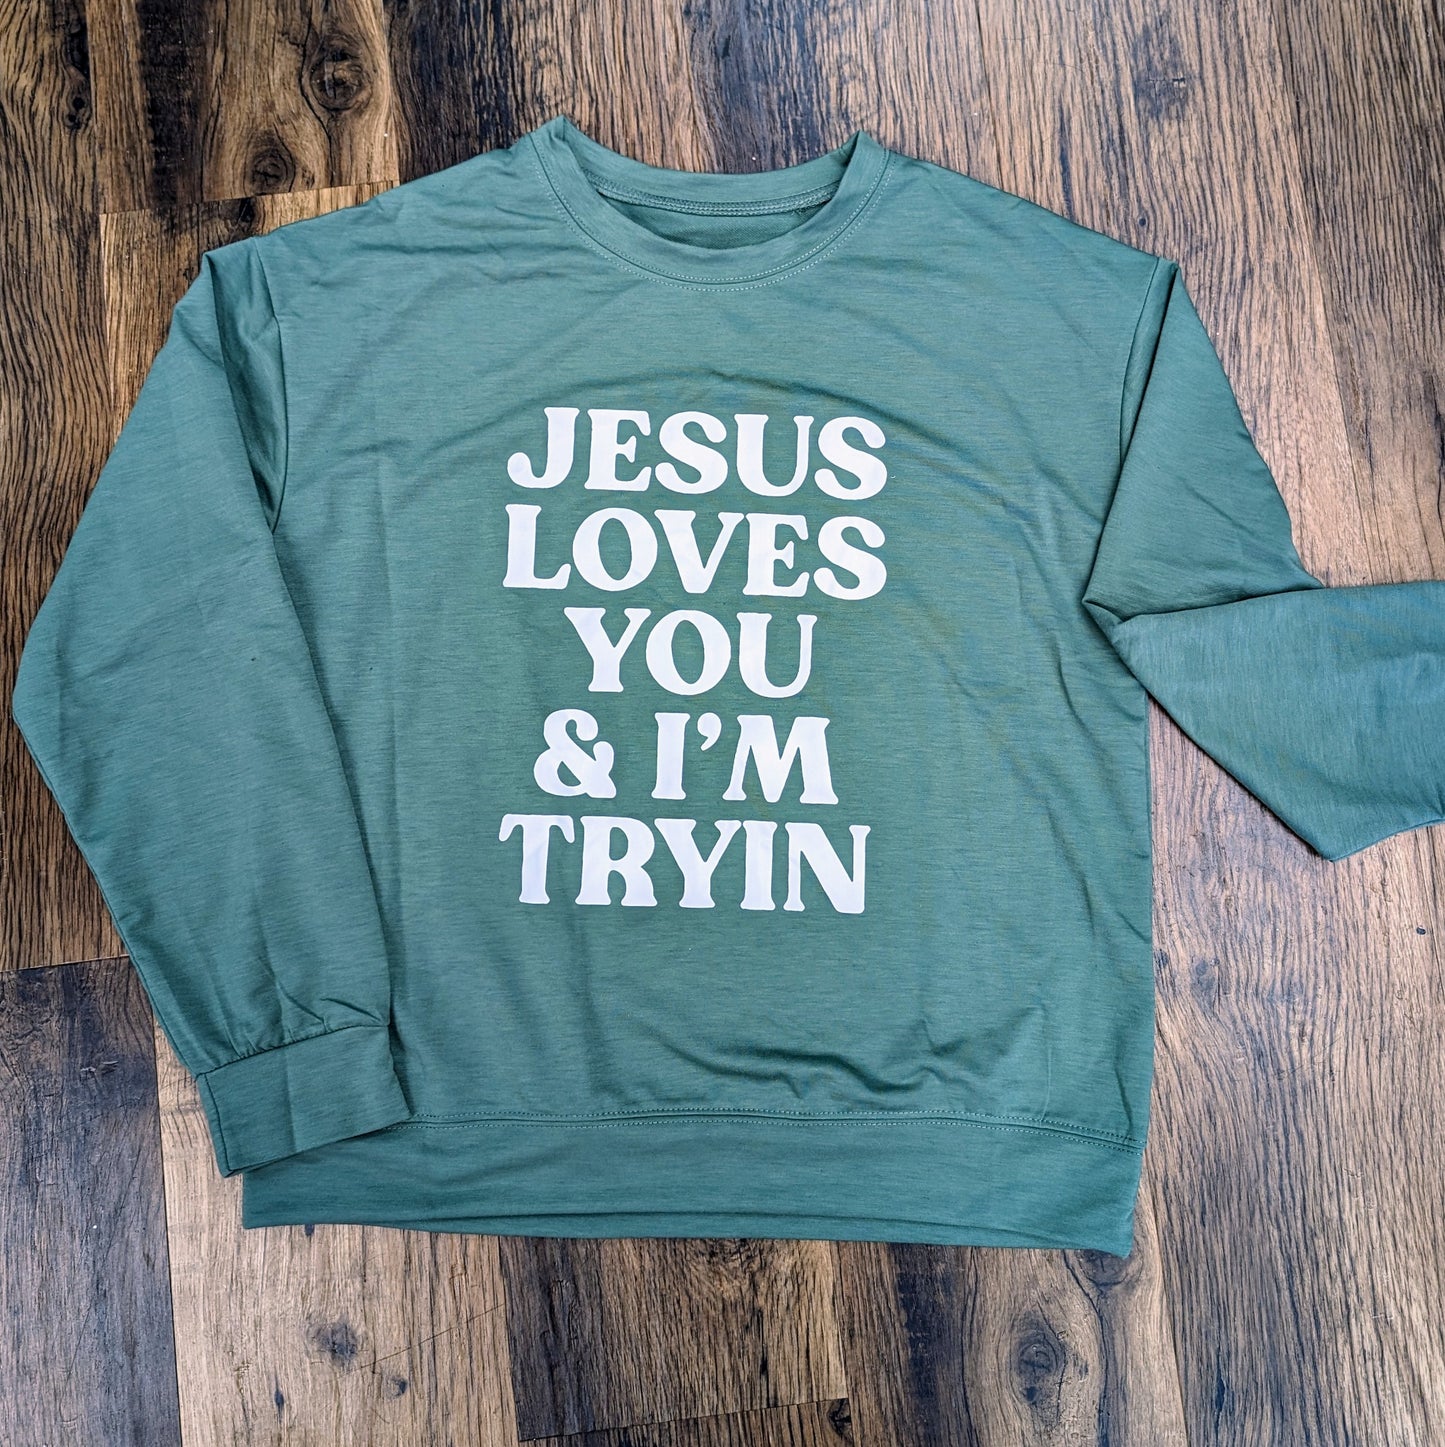 Jesus loves you & I'm tryin